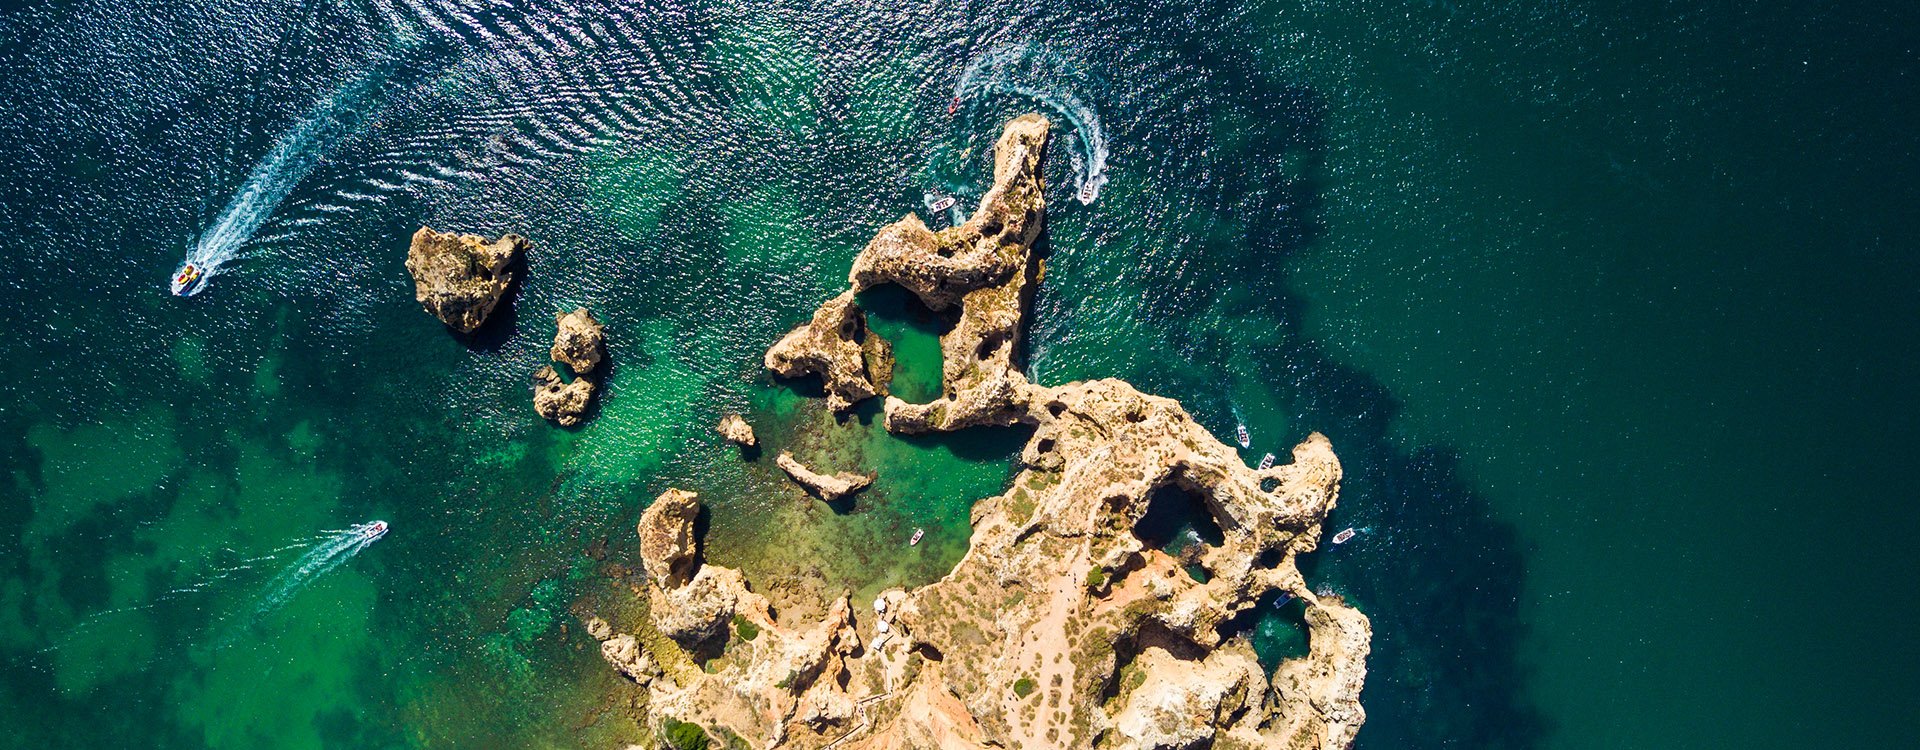 Aerial of Scenic Ponta da Piedade of Lagos, Portugal. Rugged seaside cliffs and aqua ocean waters in the Algarve region of Portugal